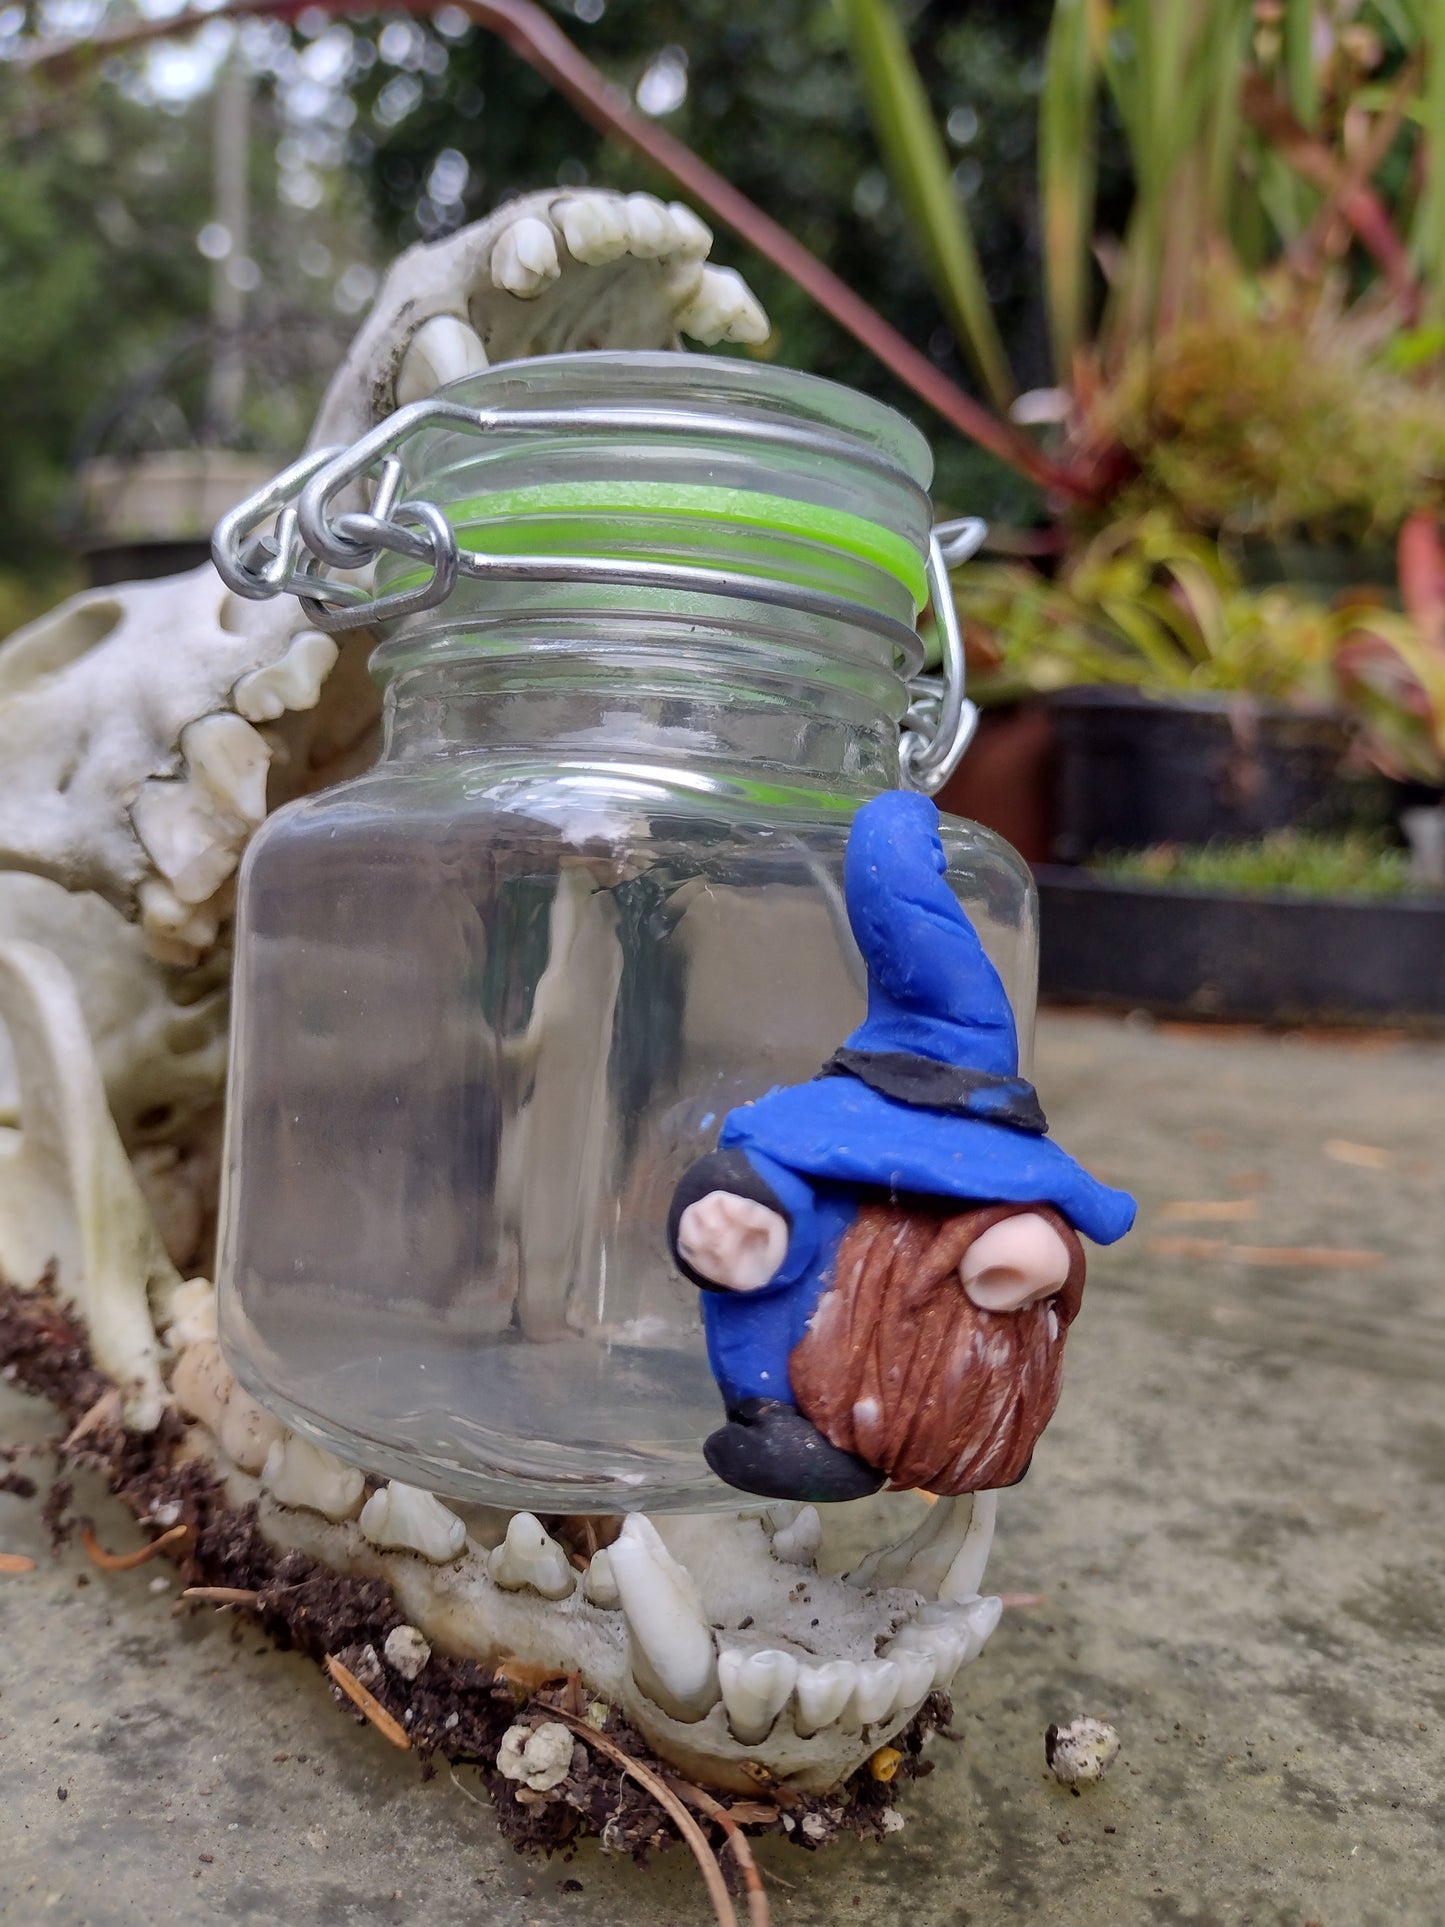 Gnome Stash Jar (Blue)